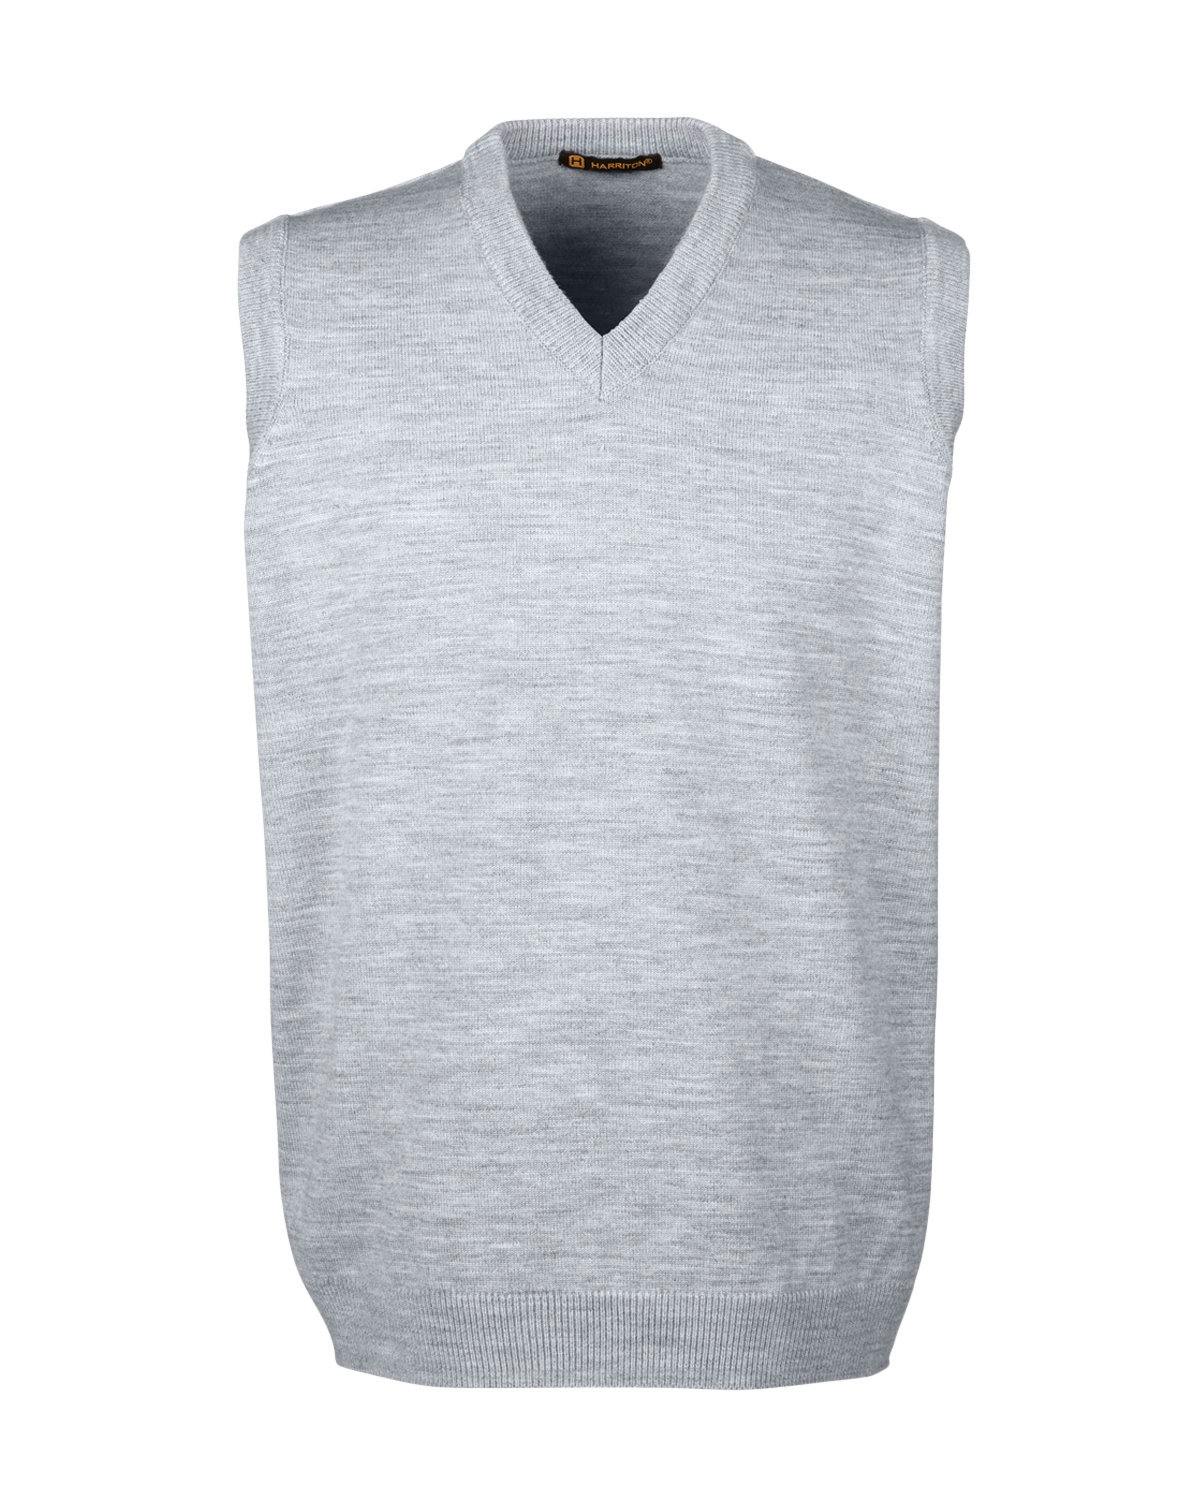 Image for Men's Pilbloc™ V-Neck Sweater Vest